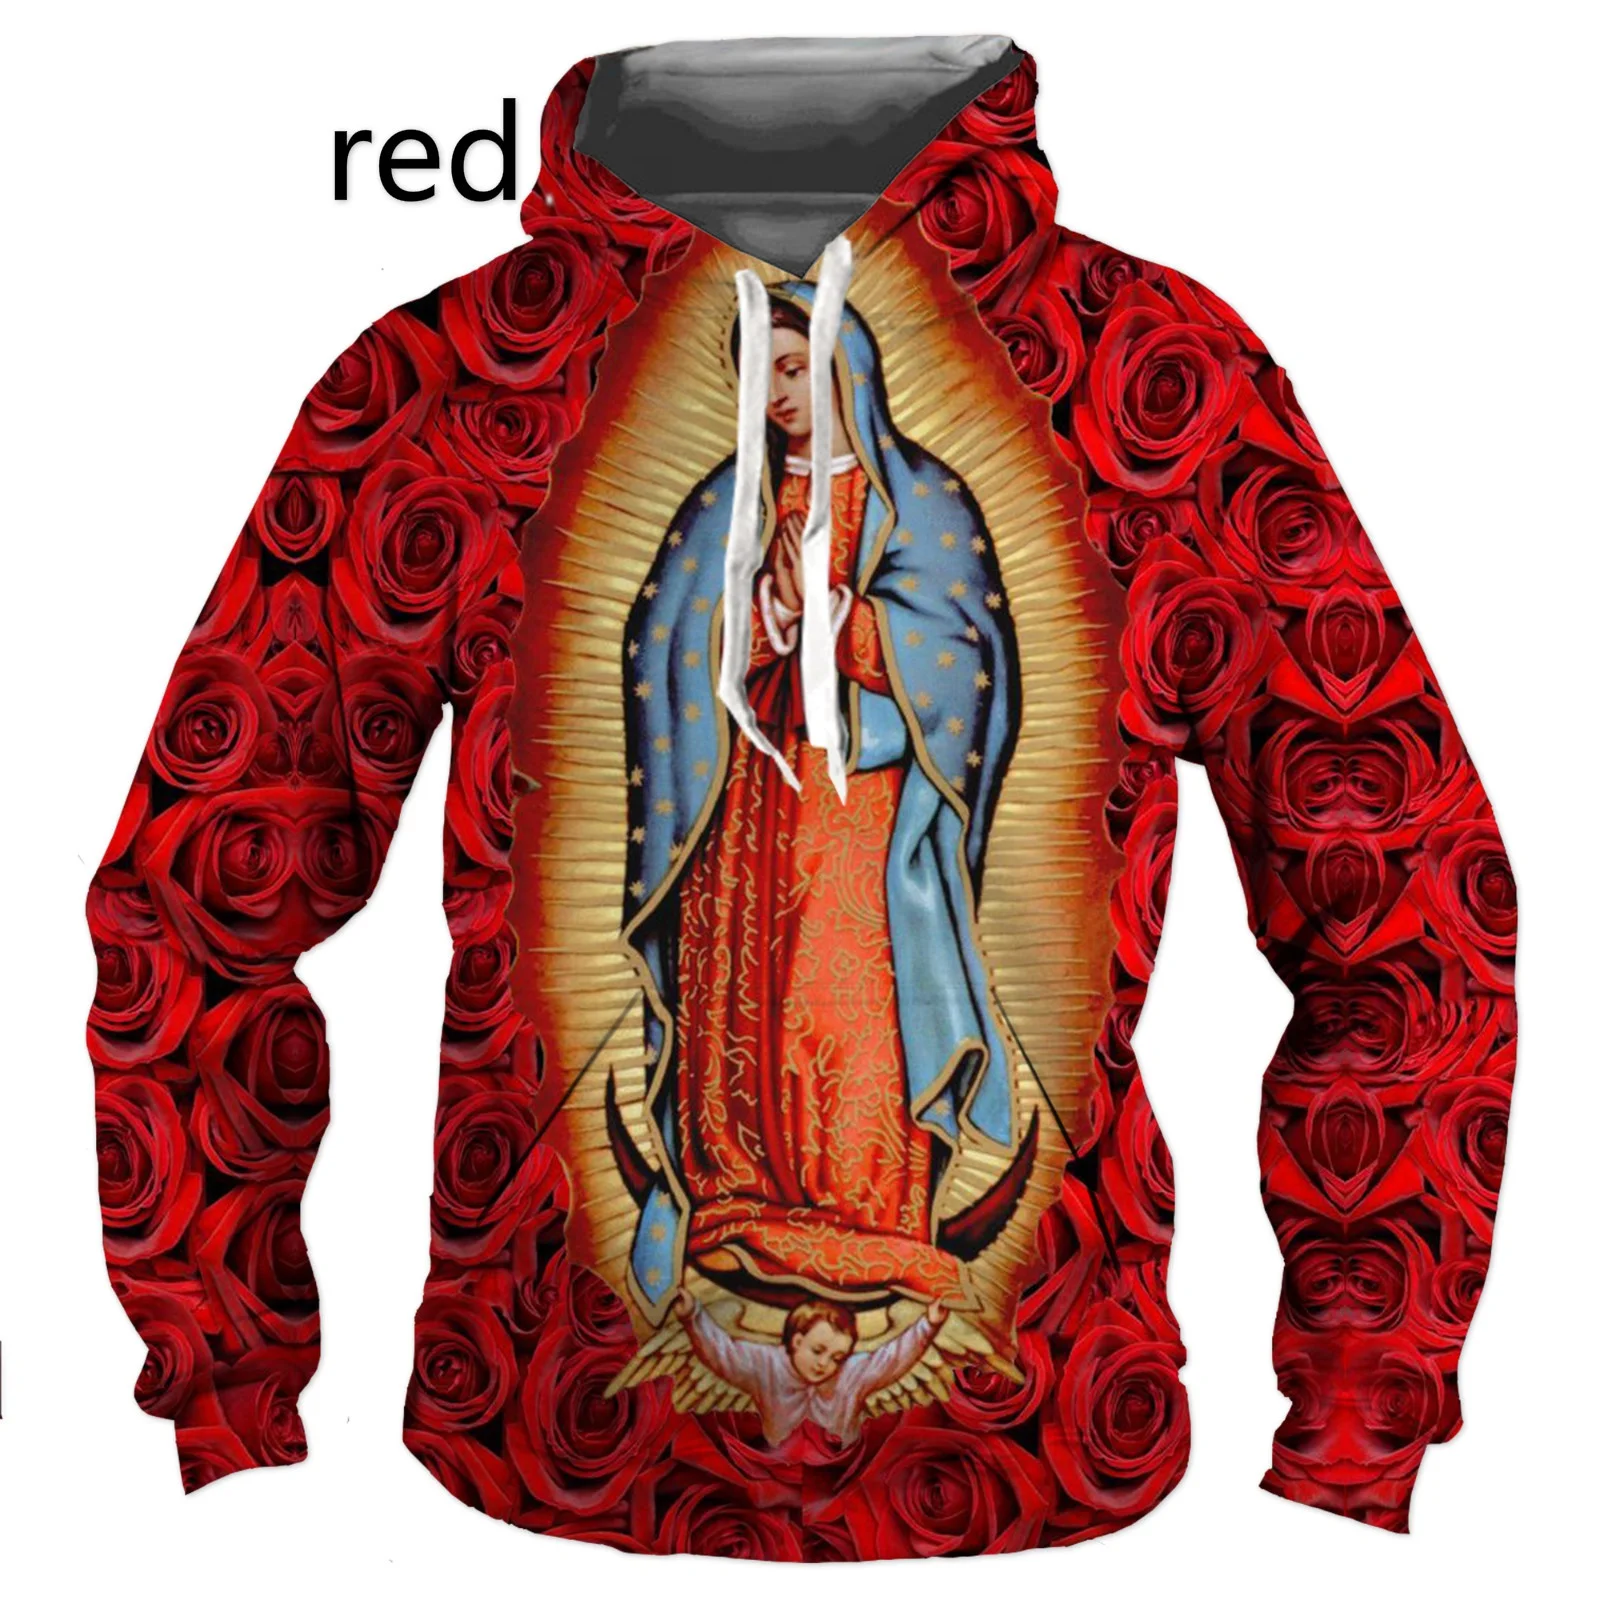 Mens and Women 3d Printed Jesus Hoodies Casual I Believe God Christian Sweatshirt Cosplay Shirt